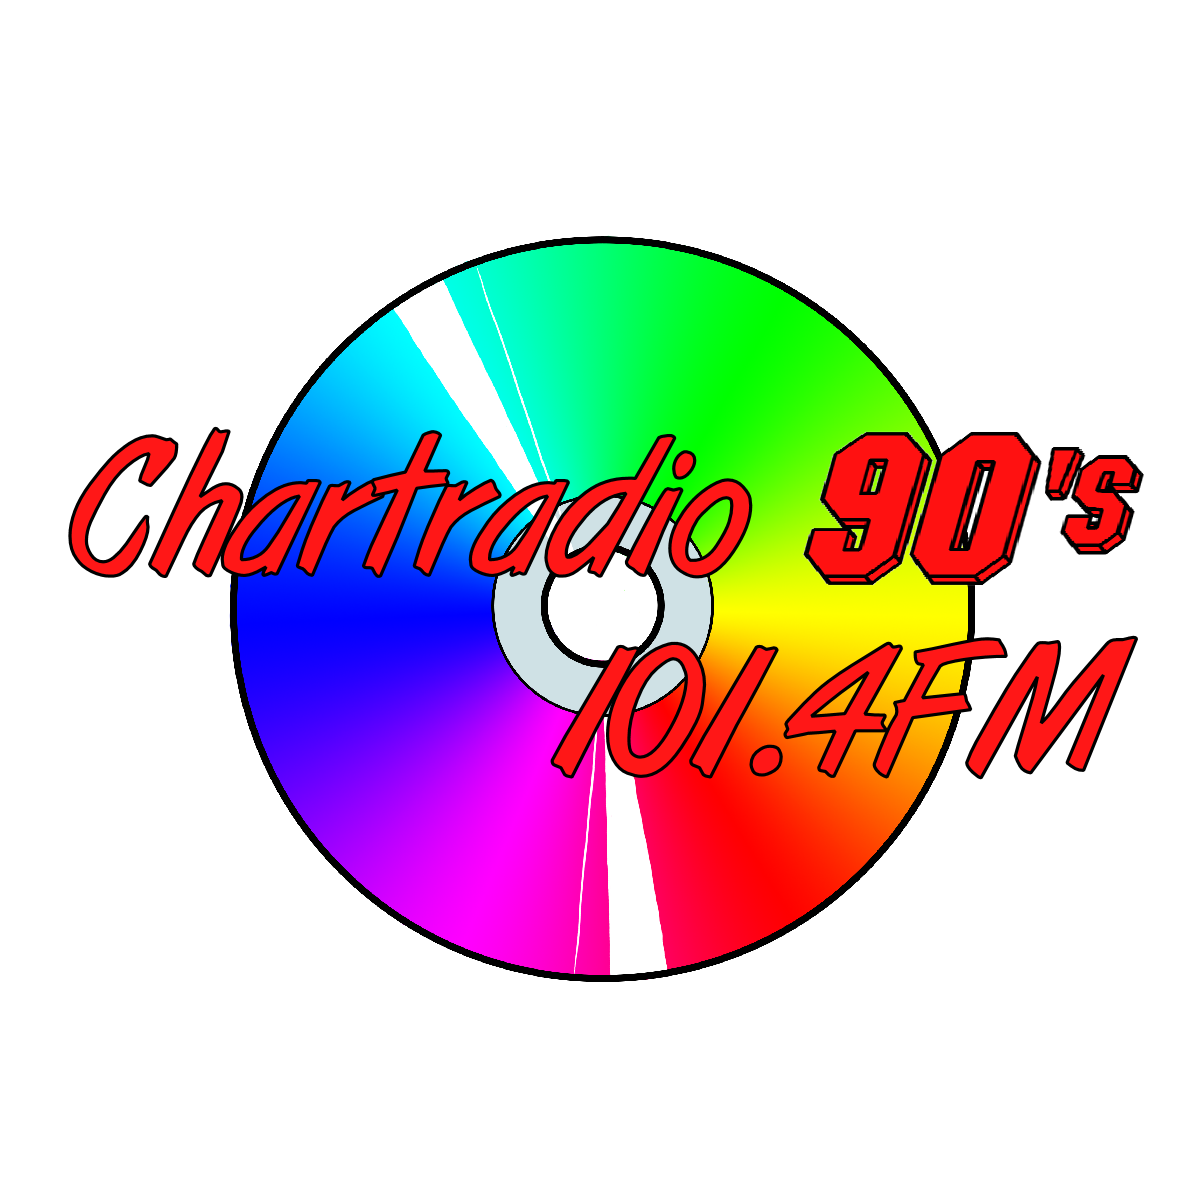 Chartradio 90s 101.4FM Sydney